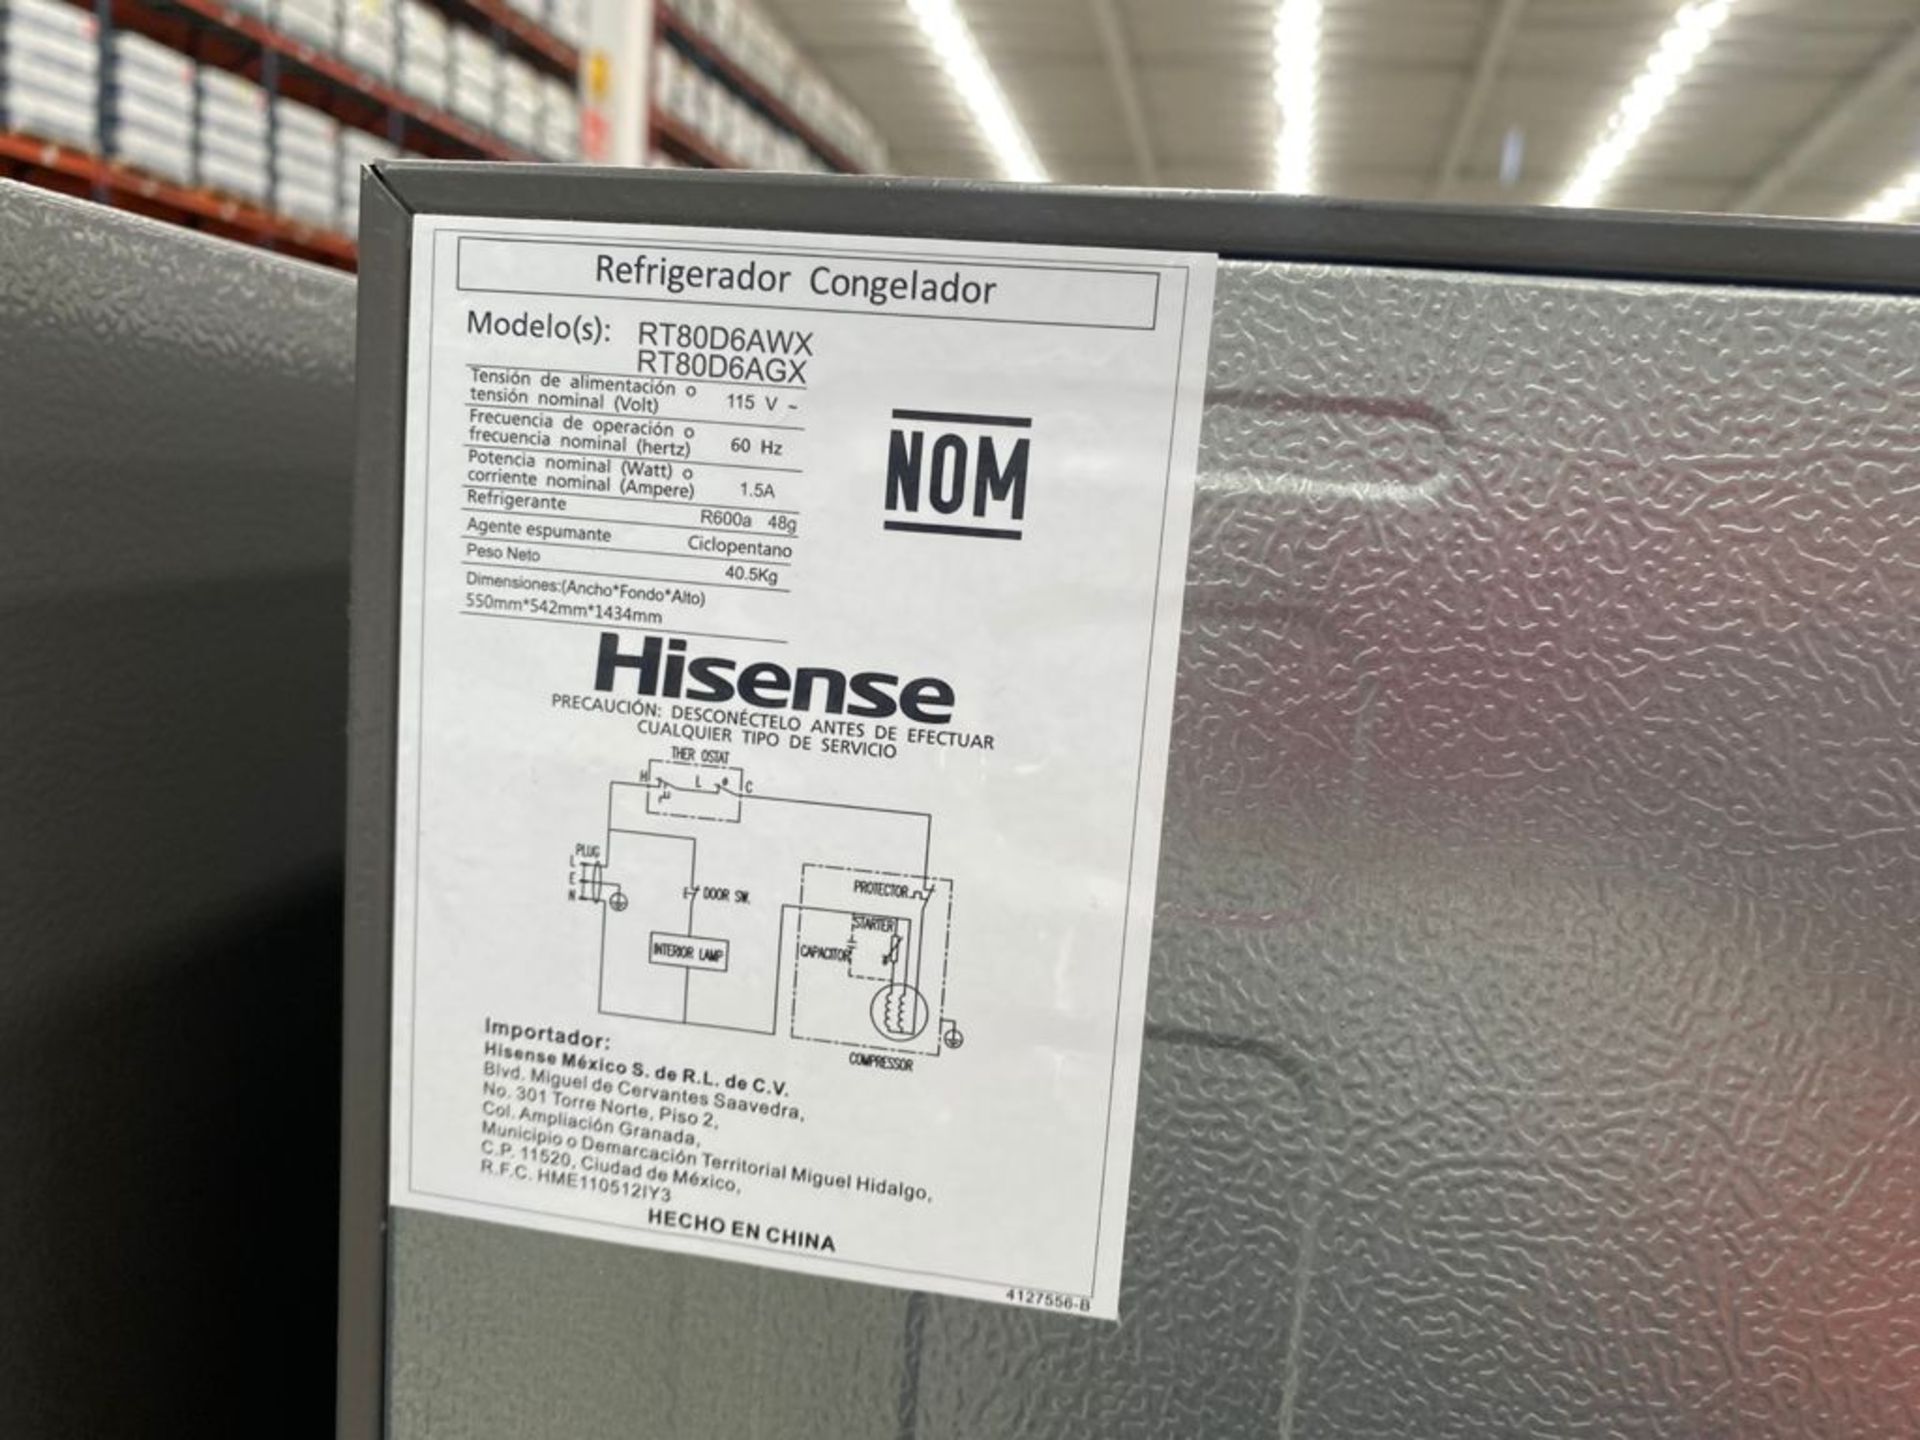 2 Refrigeradores marca Hisense color gris modelo RT80D6AWX - Image 25 of 28